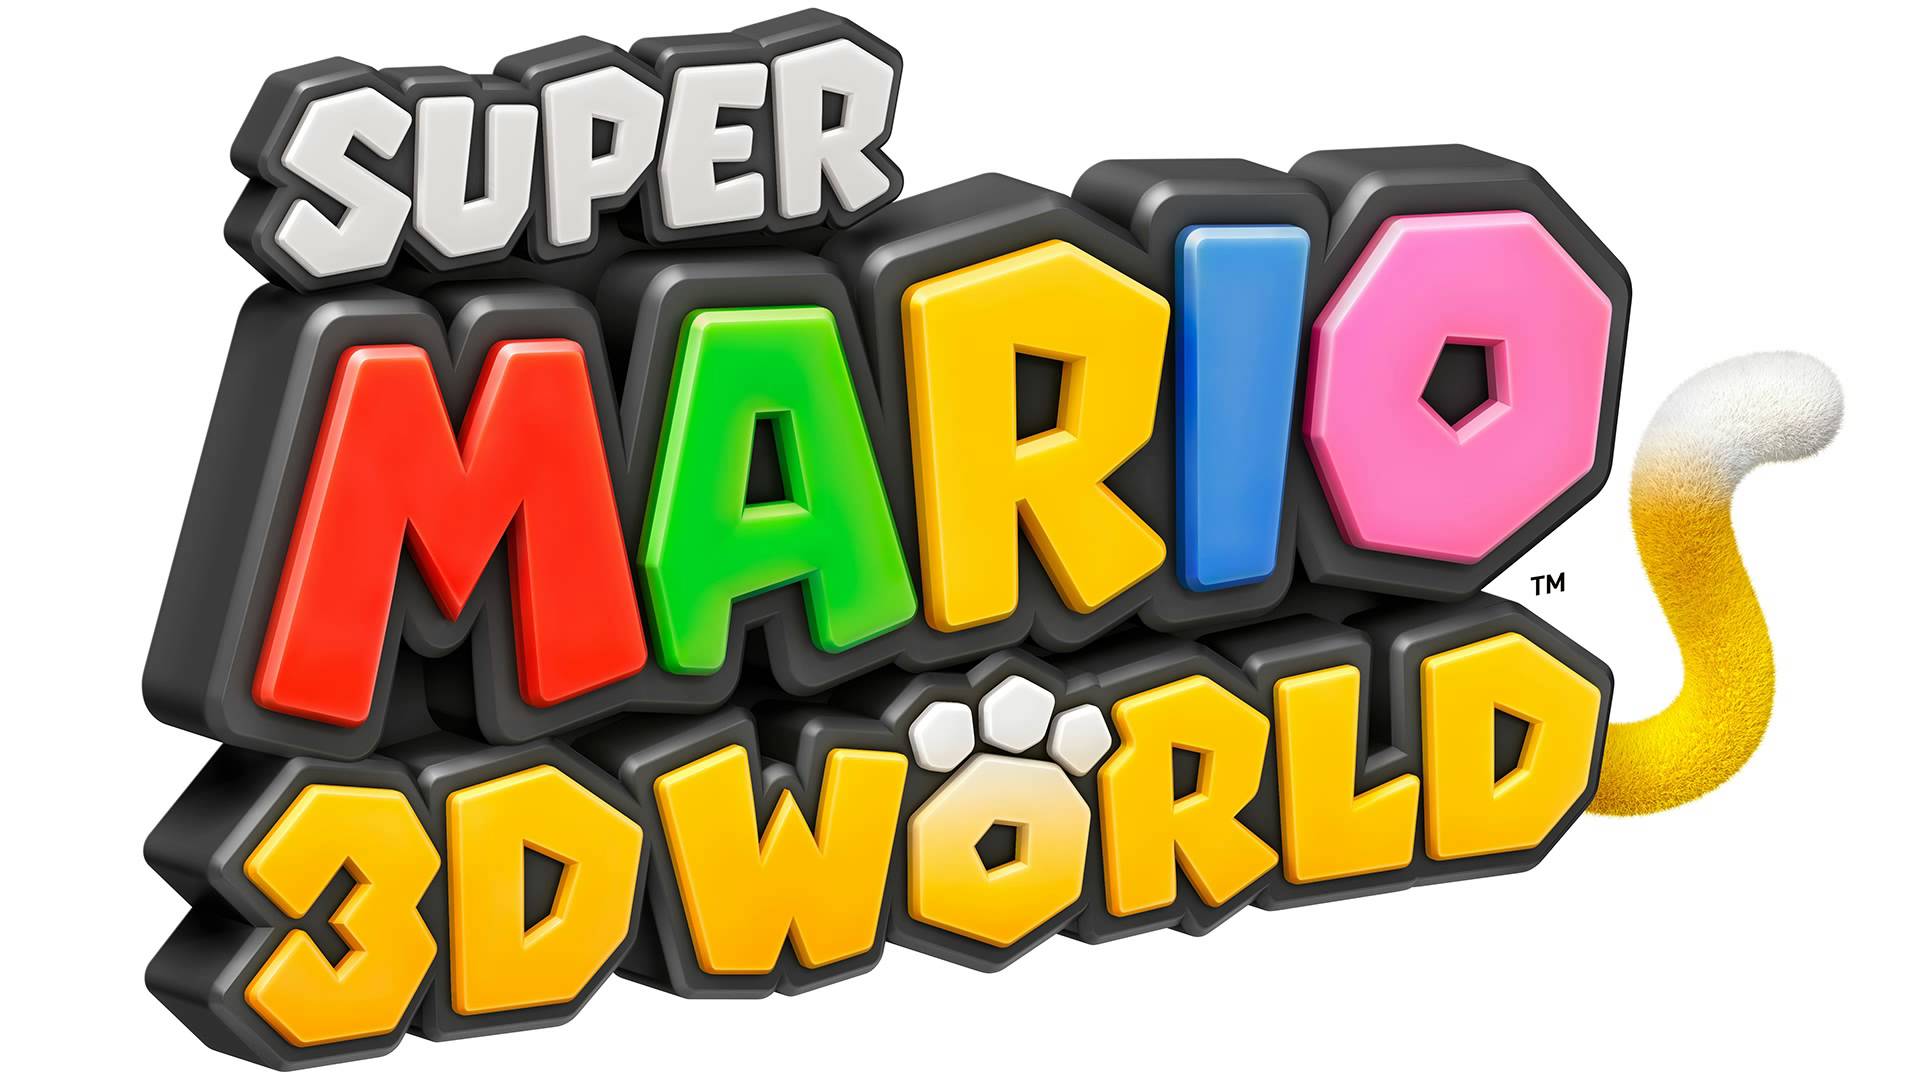 Super Mario 3D World Pics, Video Game Collection